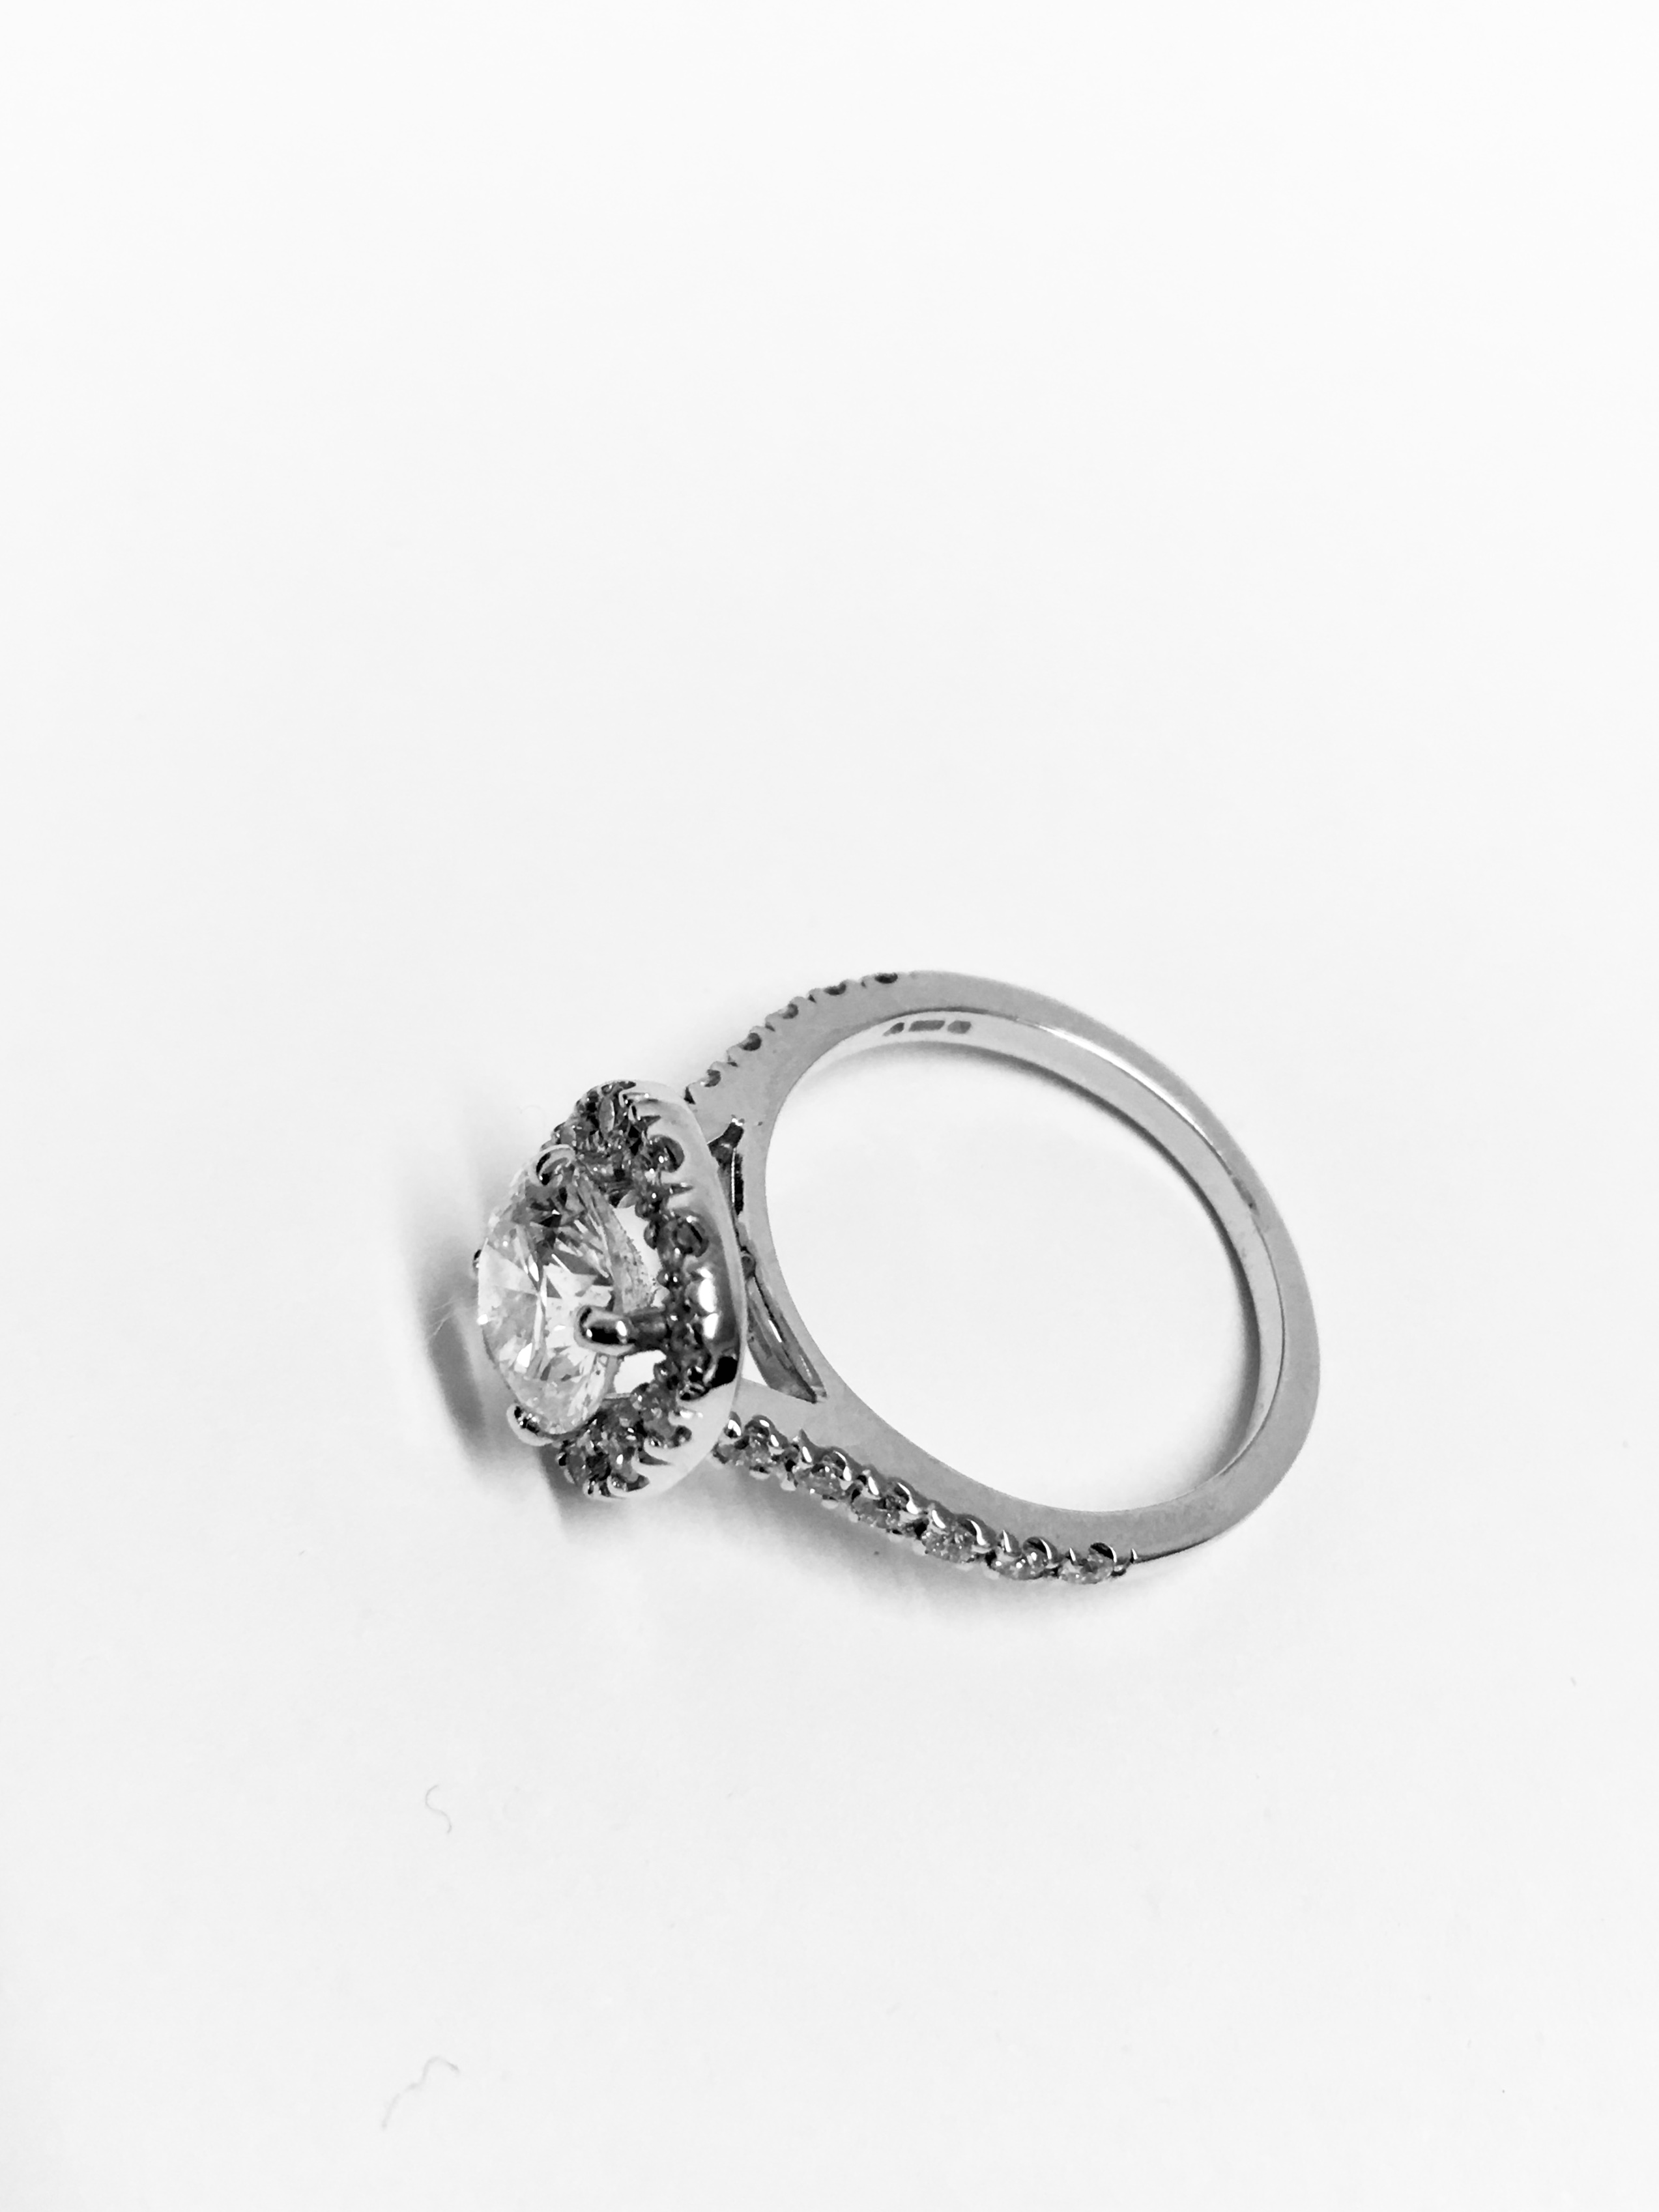 1.25ct diamond halo ring set in 18ct white gold - Image 24 of 24